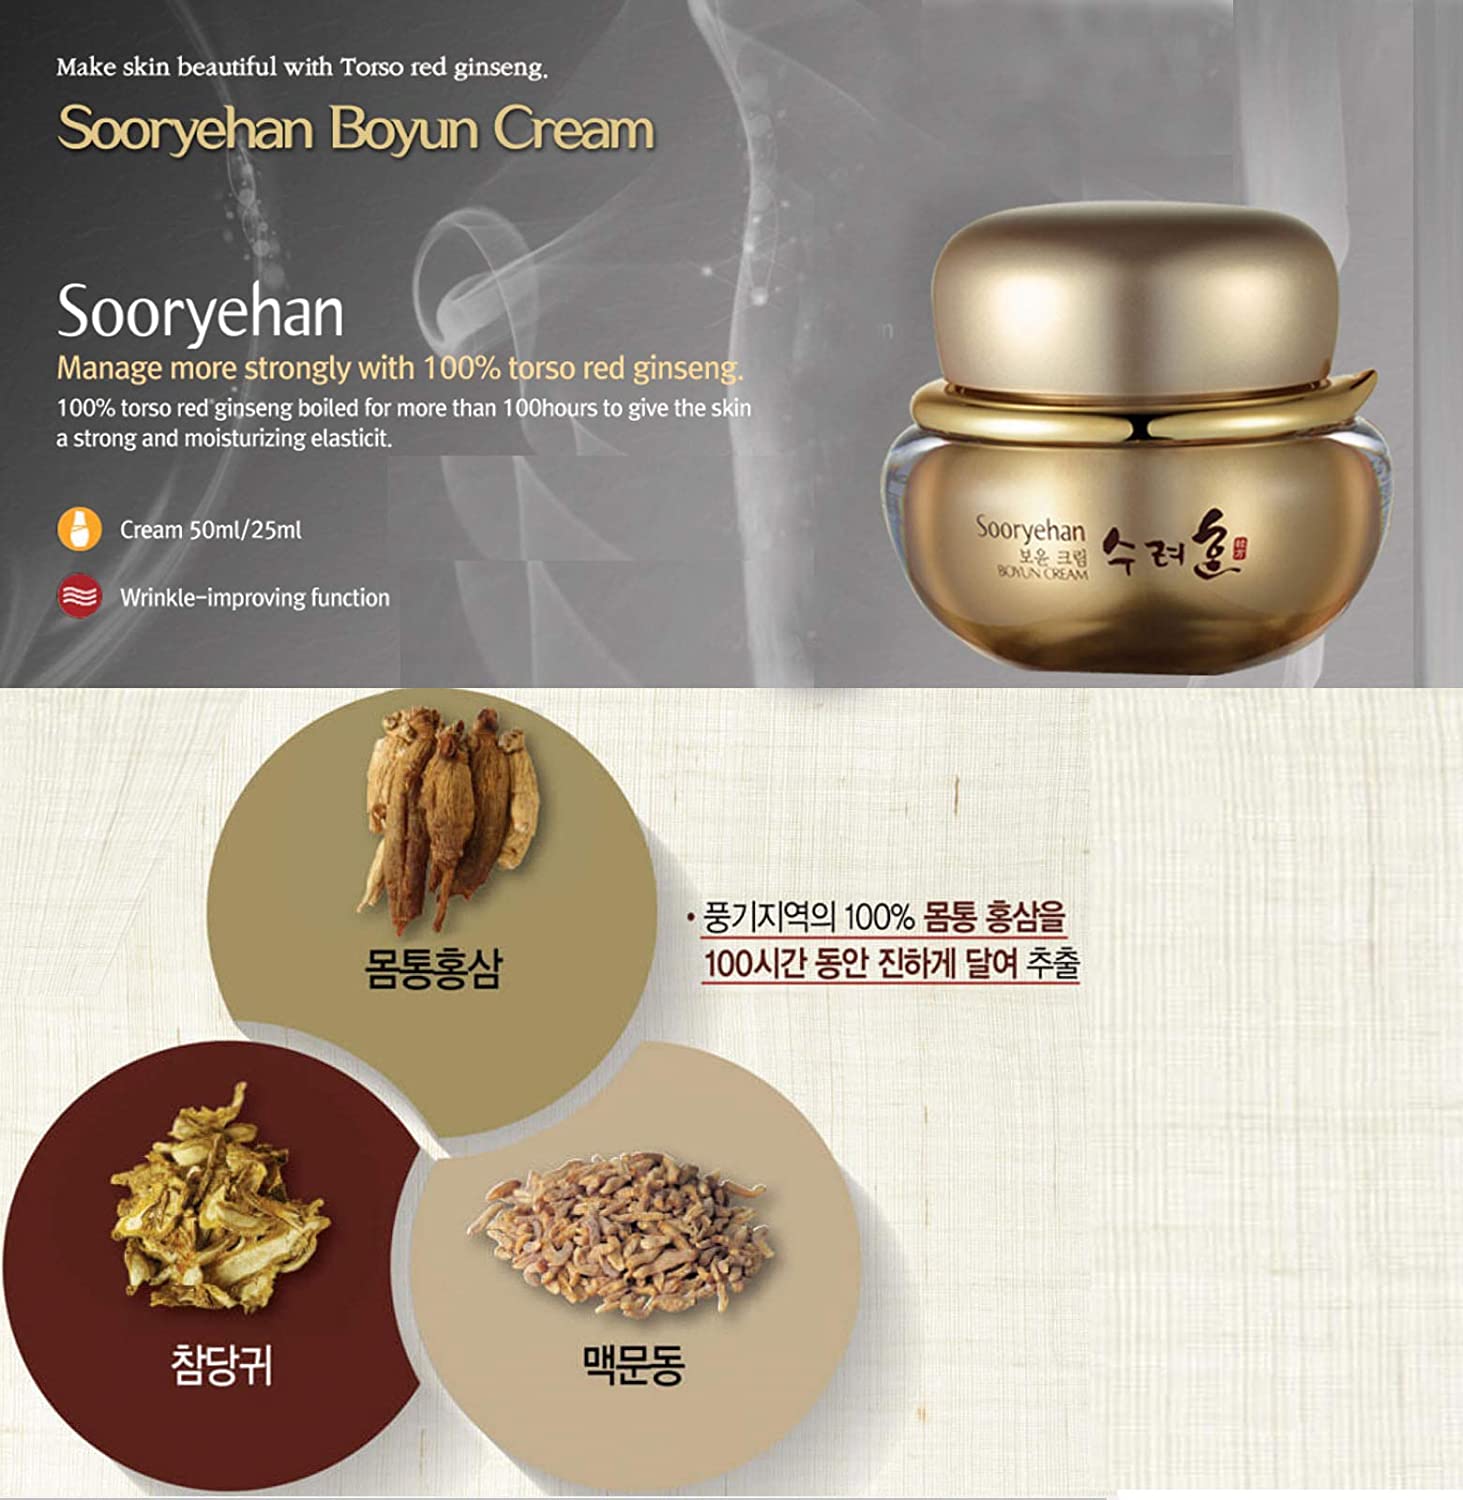 SOORYEHAN Boyun Cream Special Set anti-aging red ginseng elasticity